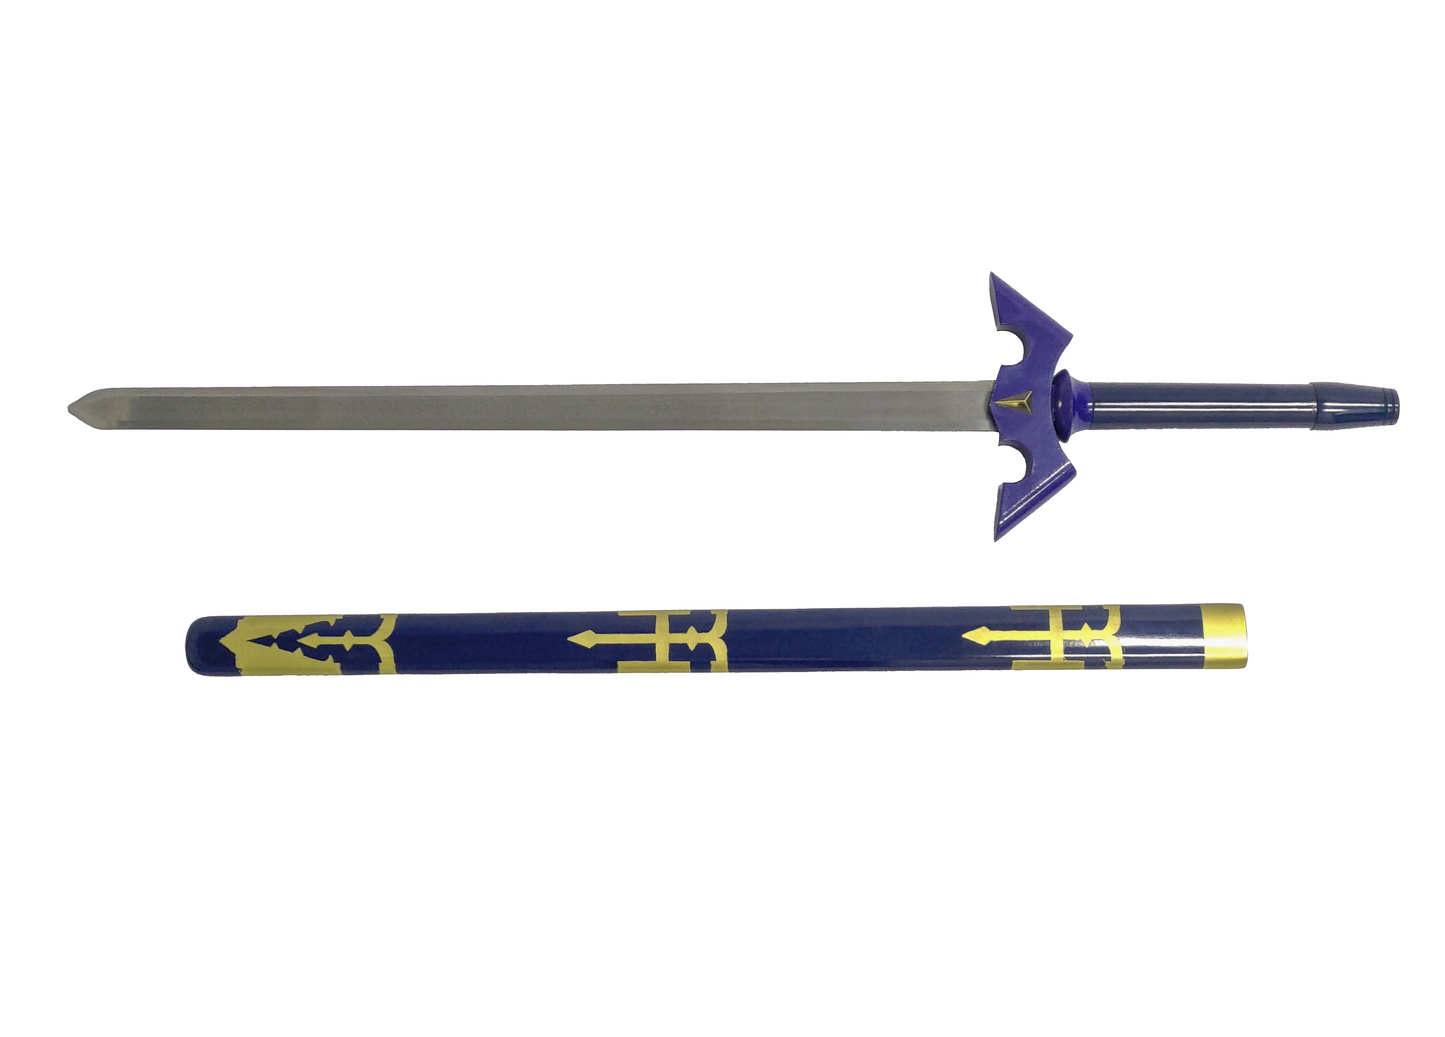 LEGEND OF ZELDA: LINK'S MASTER SKYWARD SWORD